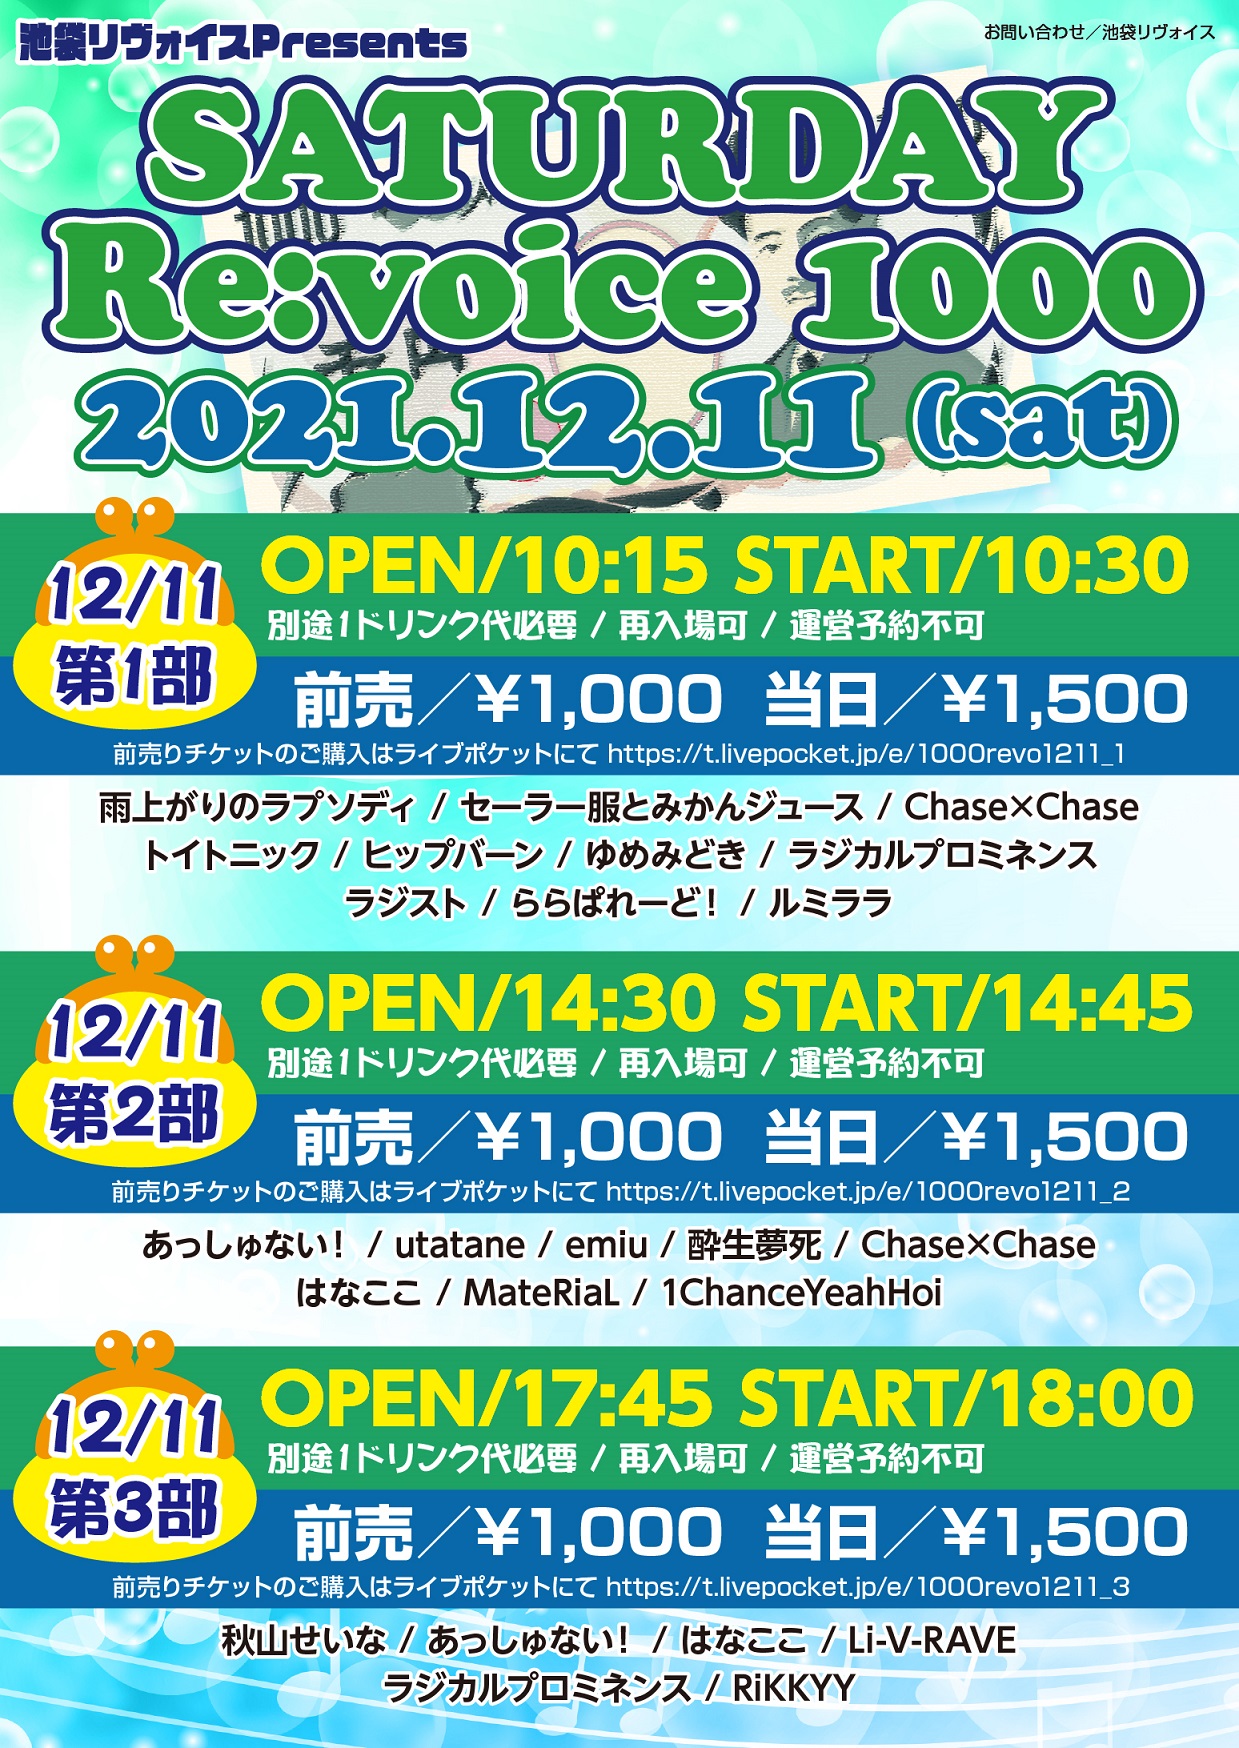 【第三部】SATURDAY Re:voice 1000